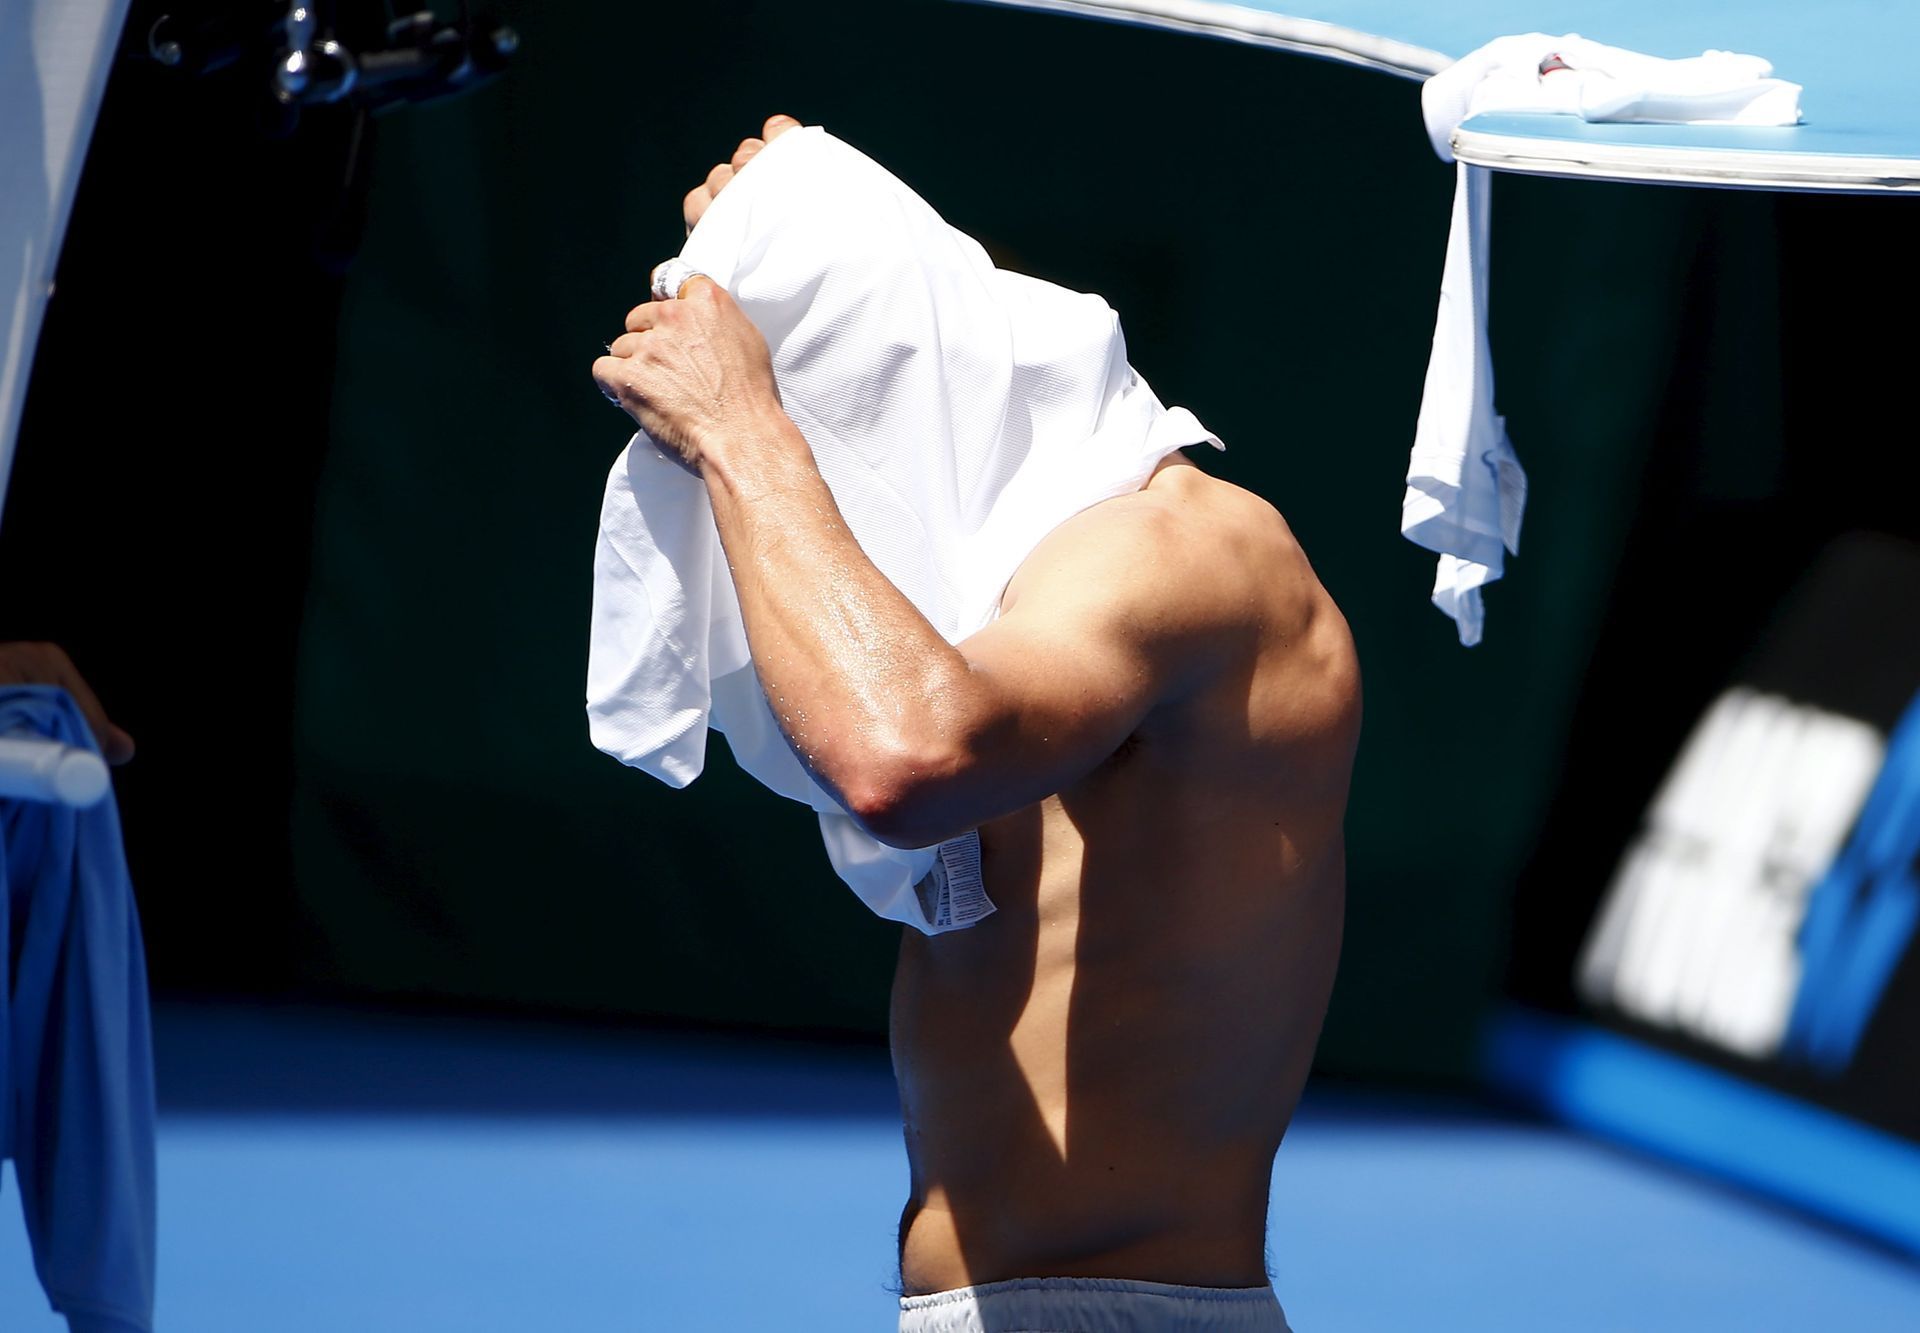 Rafael Nadal při tréninku na Australian Open 2016